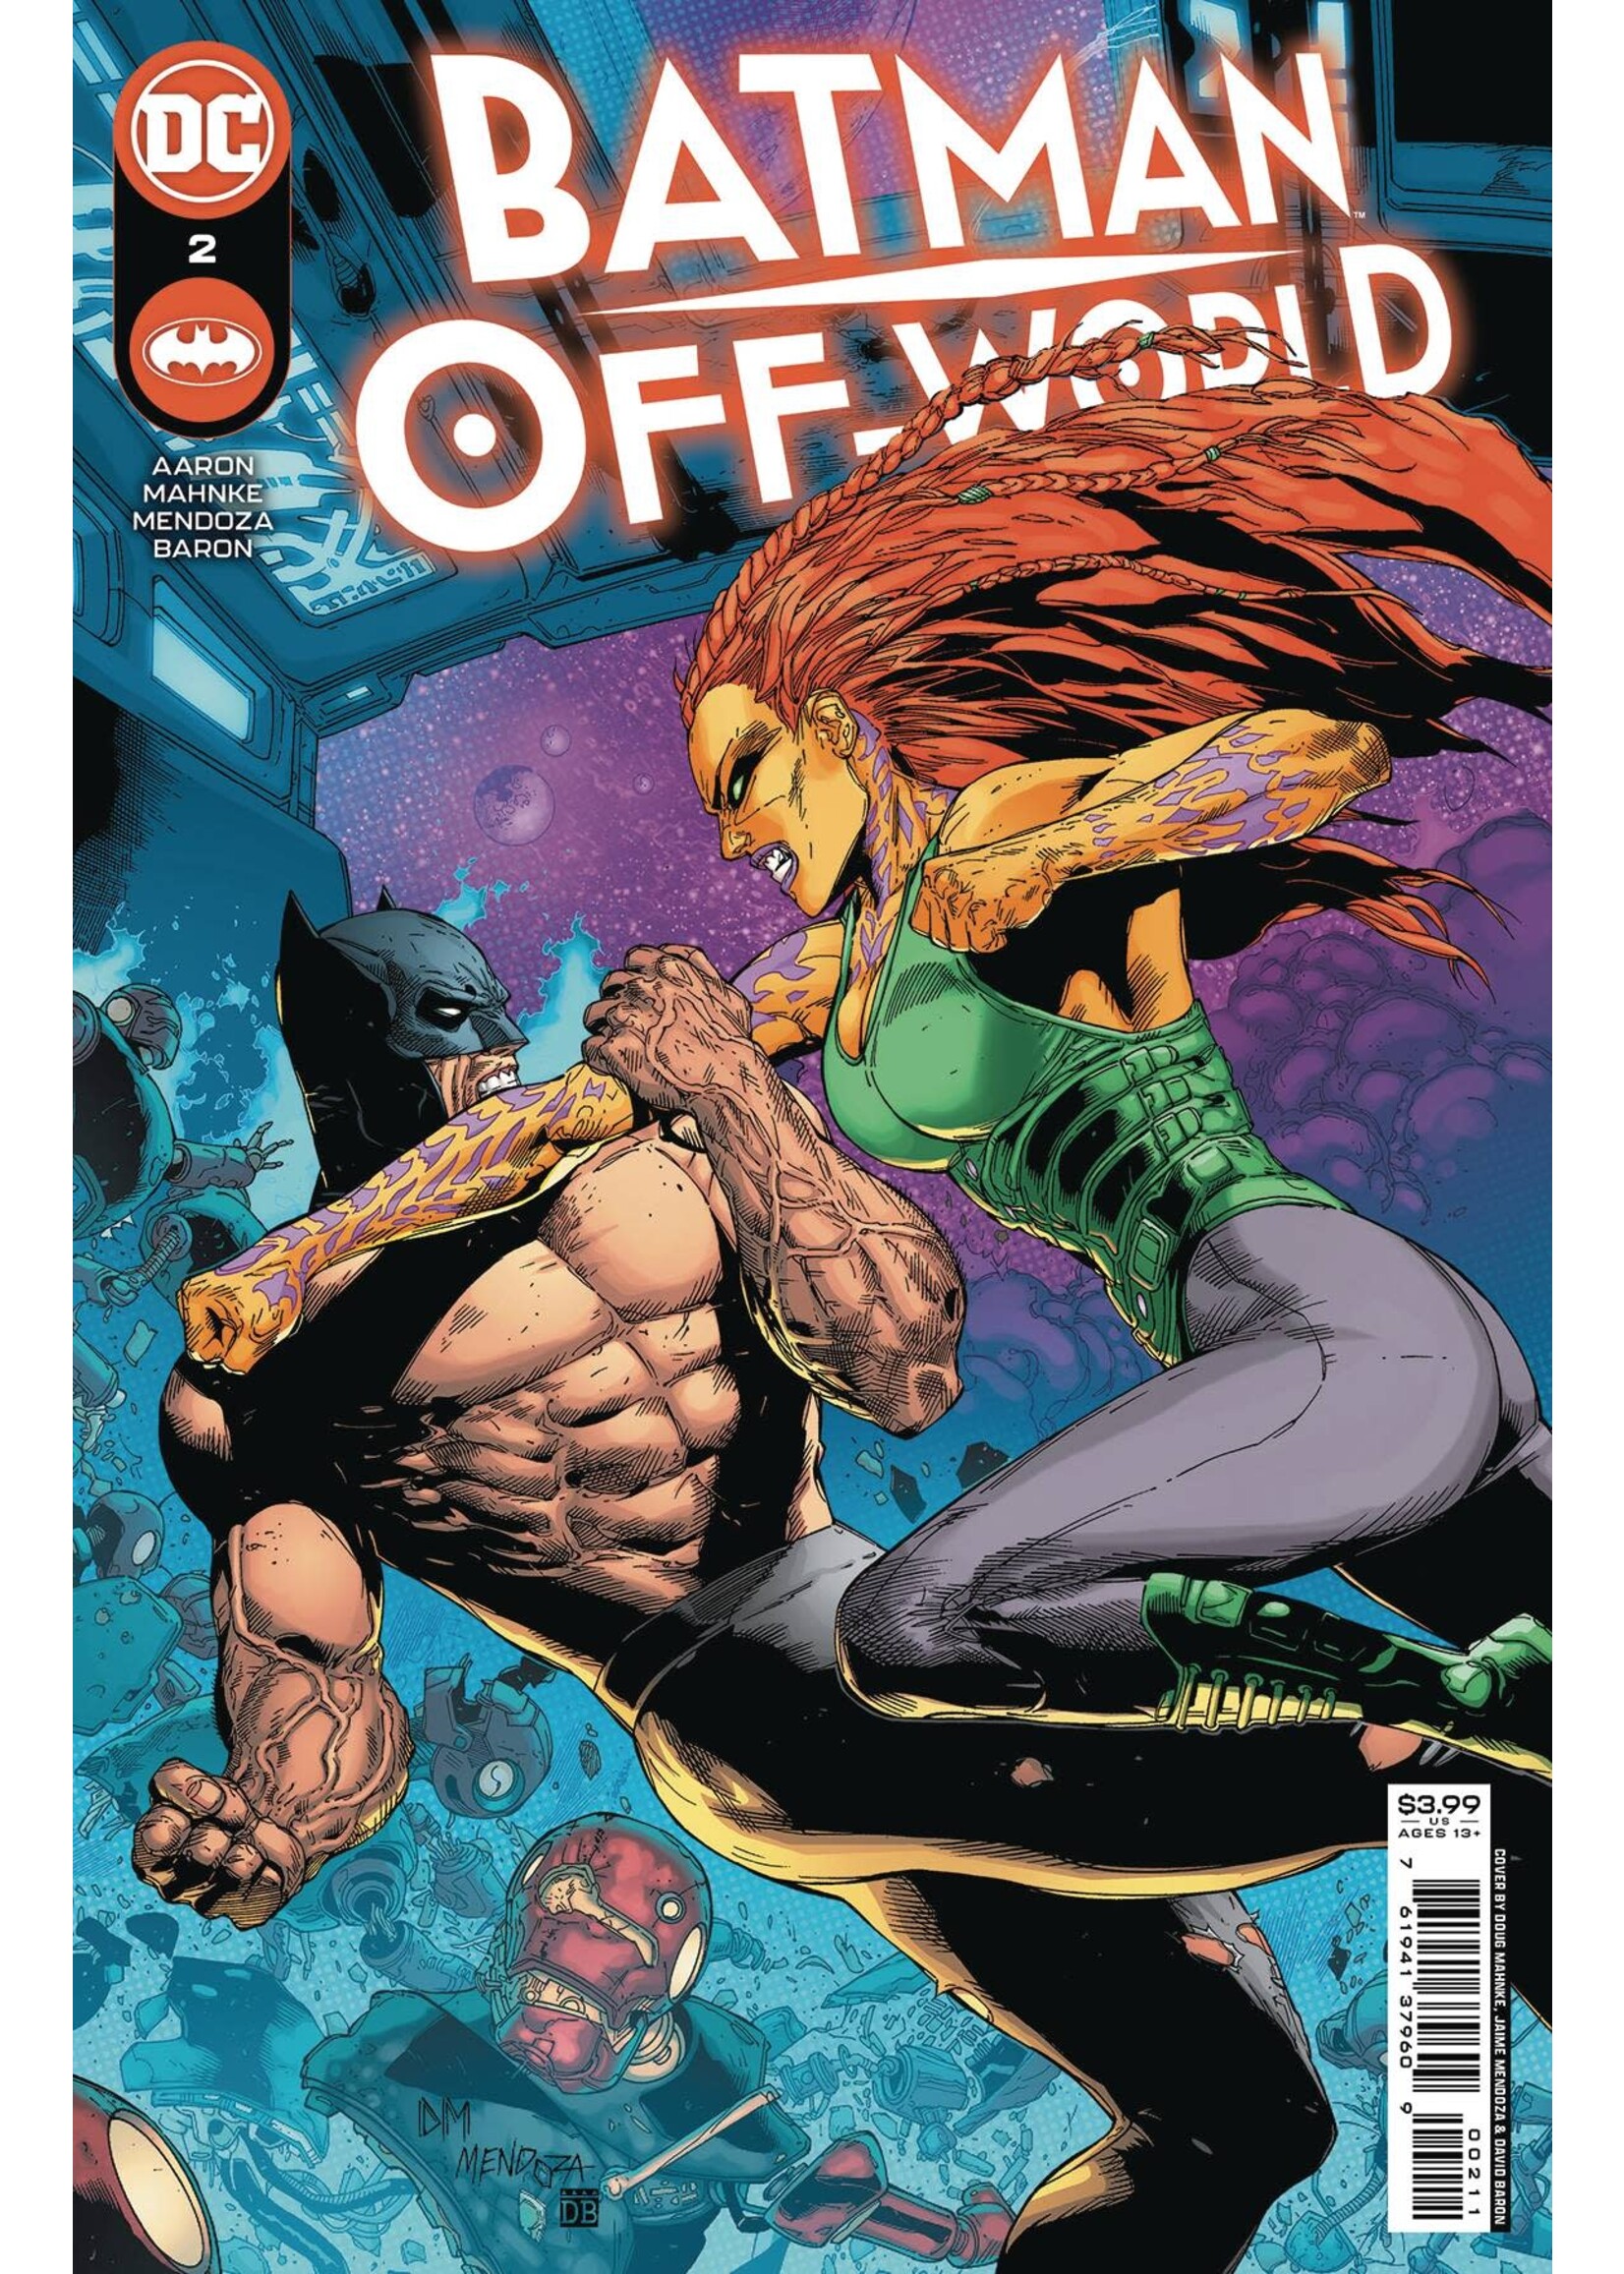 DC COMICS BATMAN OFF-WORLD #2